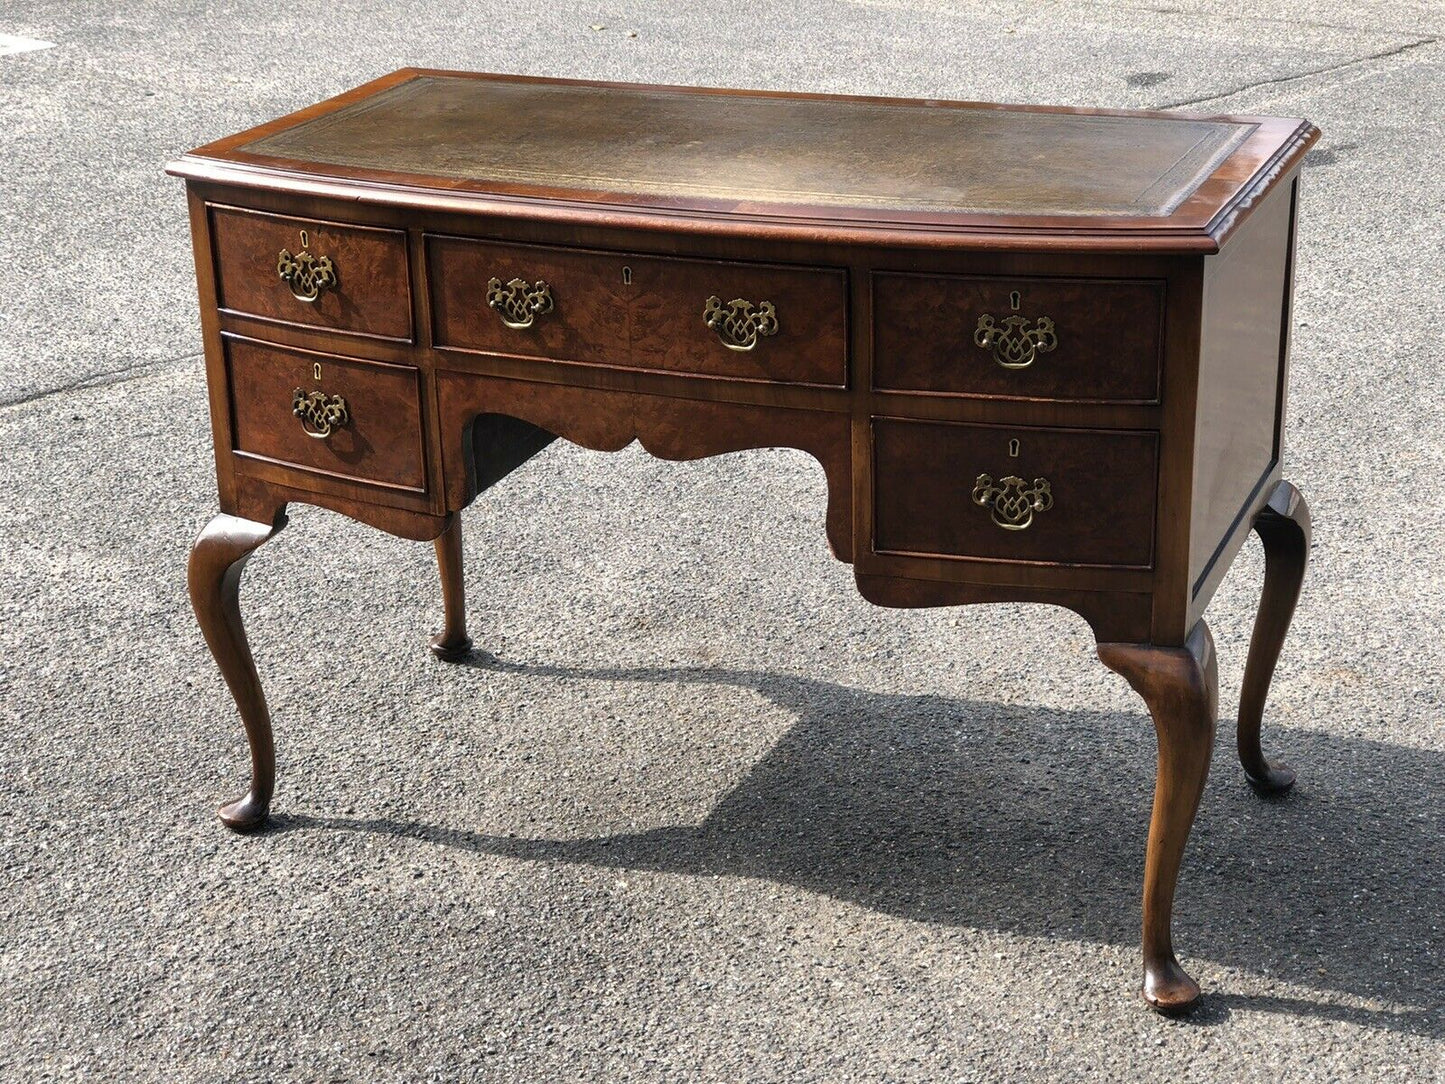 1930’s Walnut Desk, Leather Top, Brass Handles.